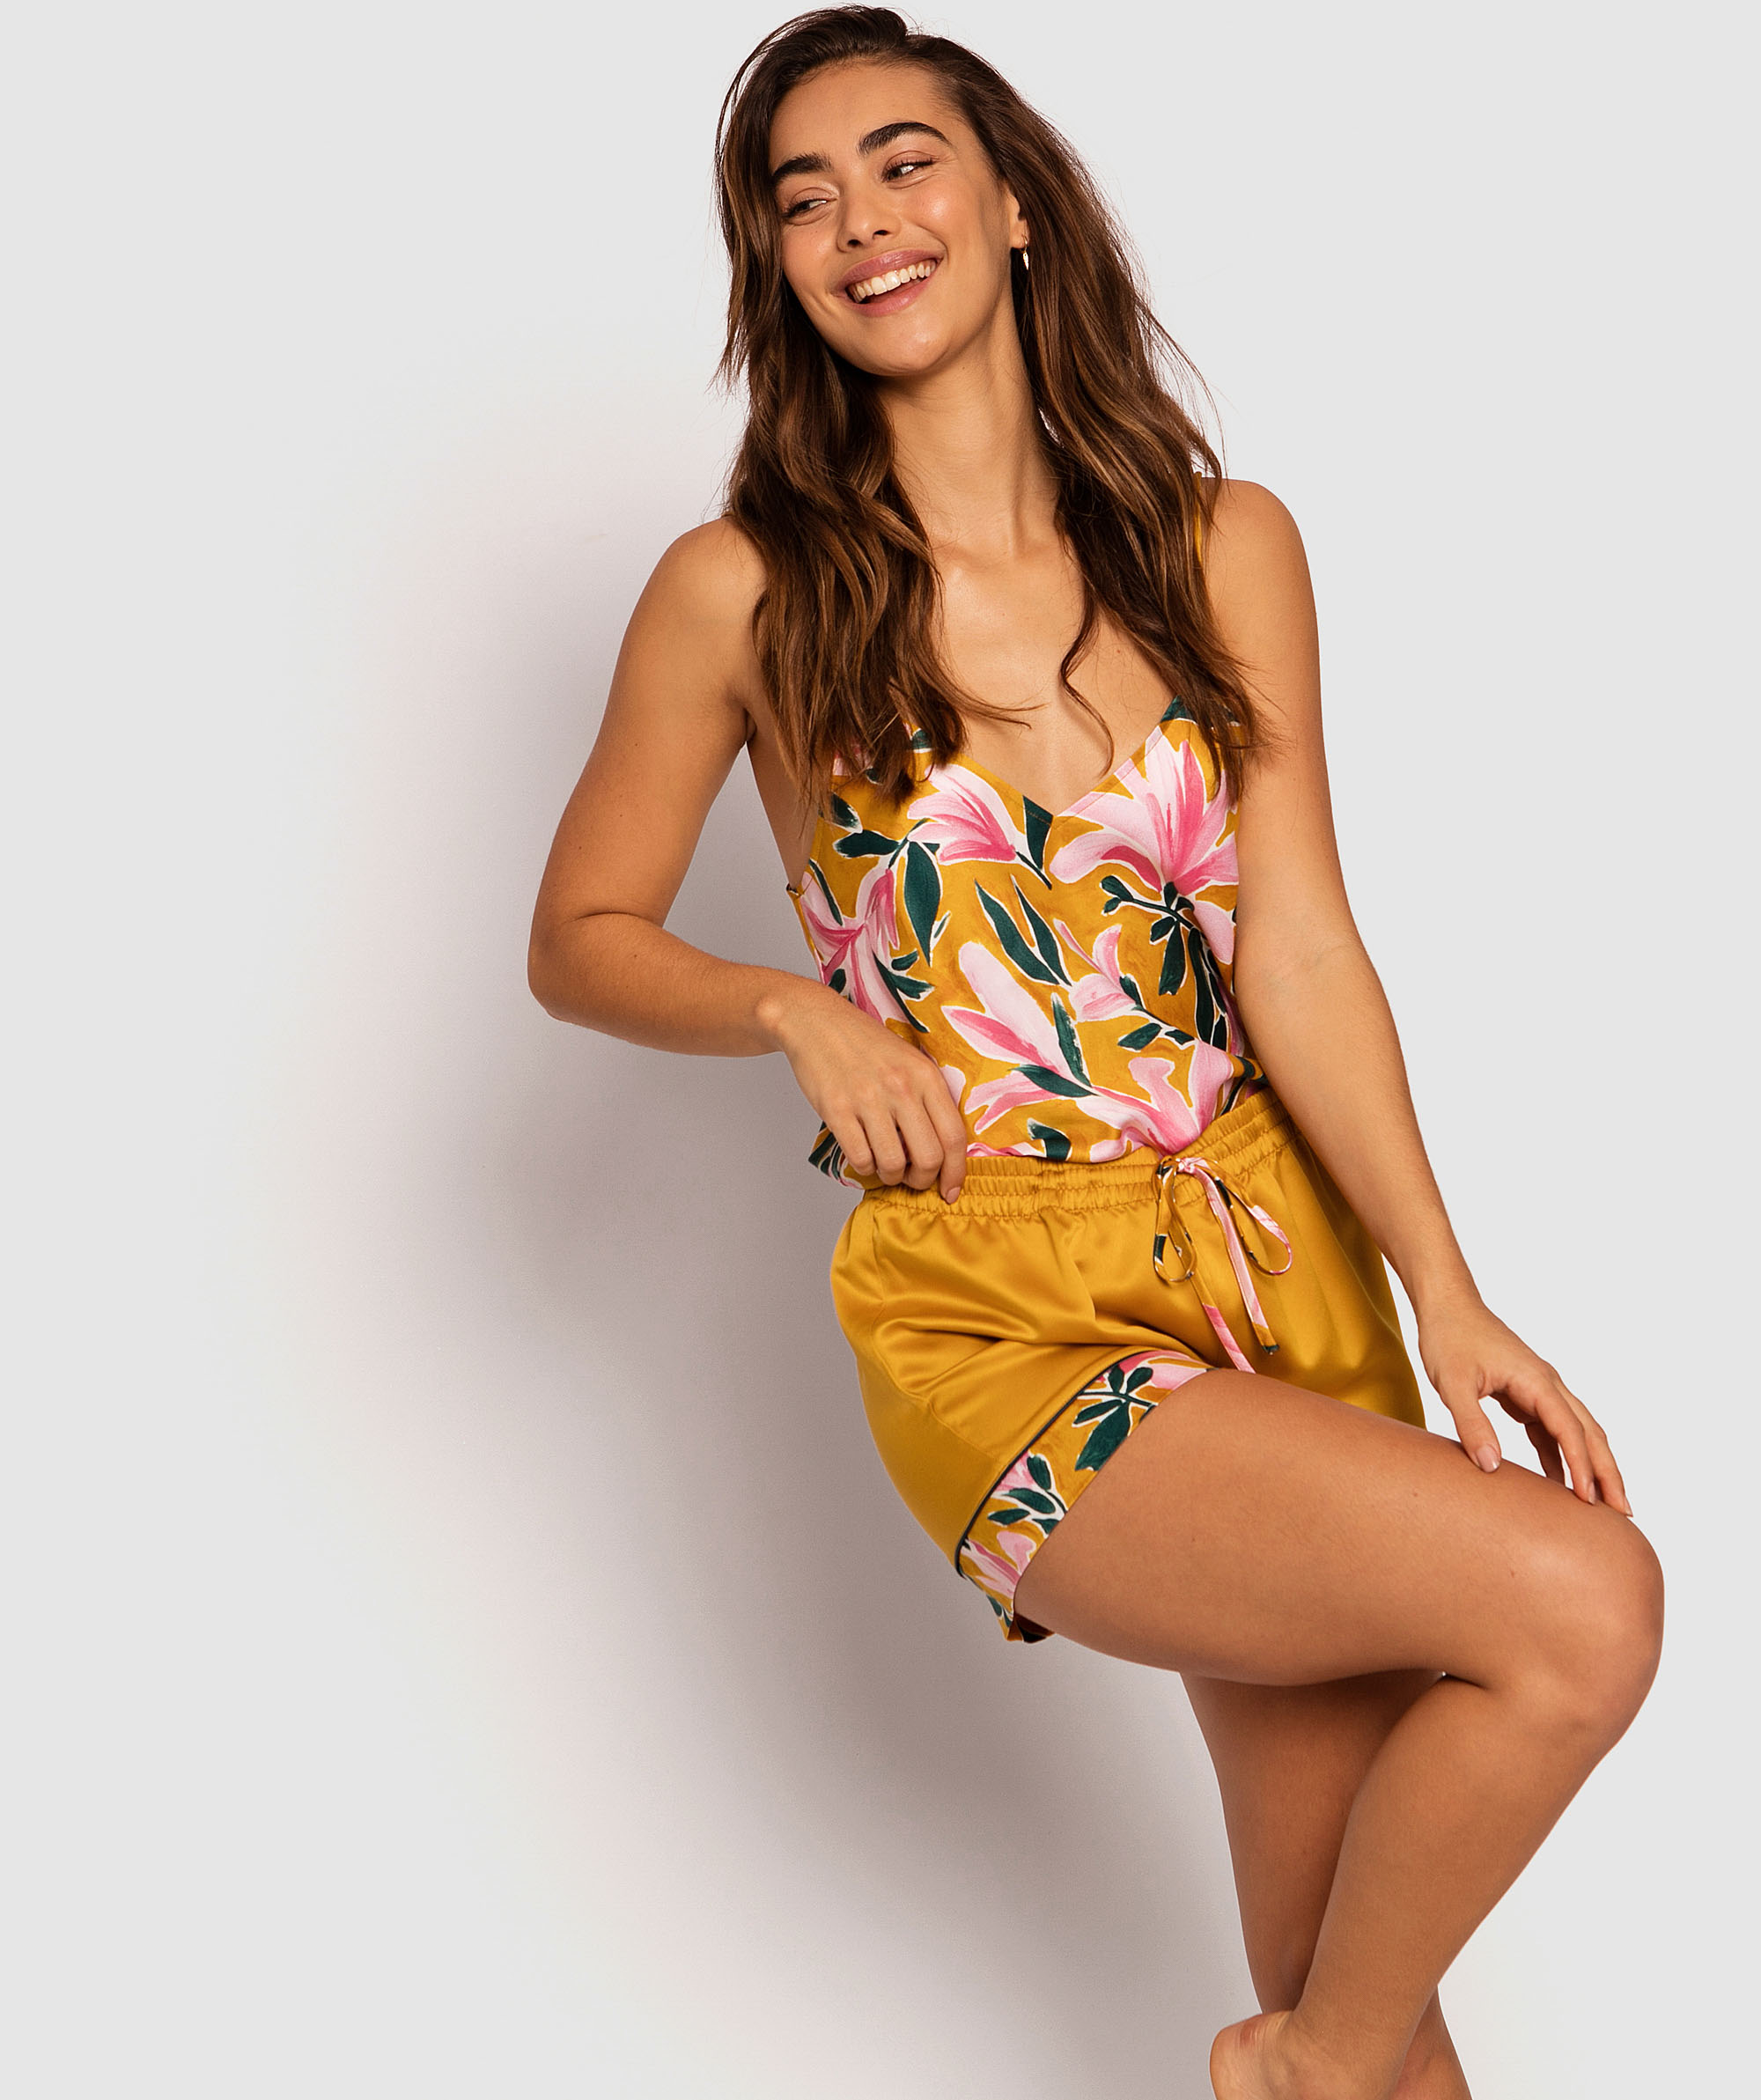 Saint Tropez Shorts - Dark Yellow/Floral Print 